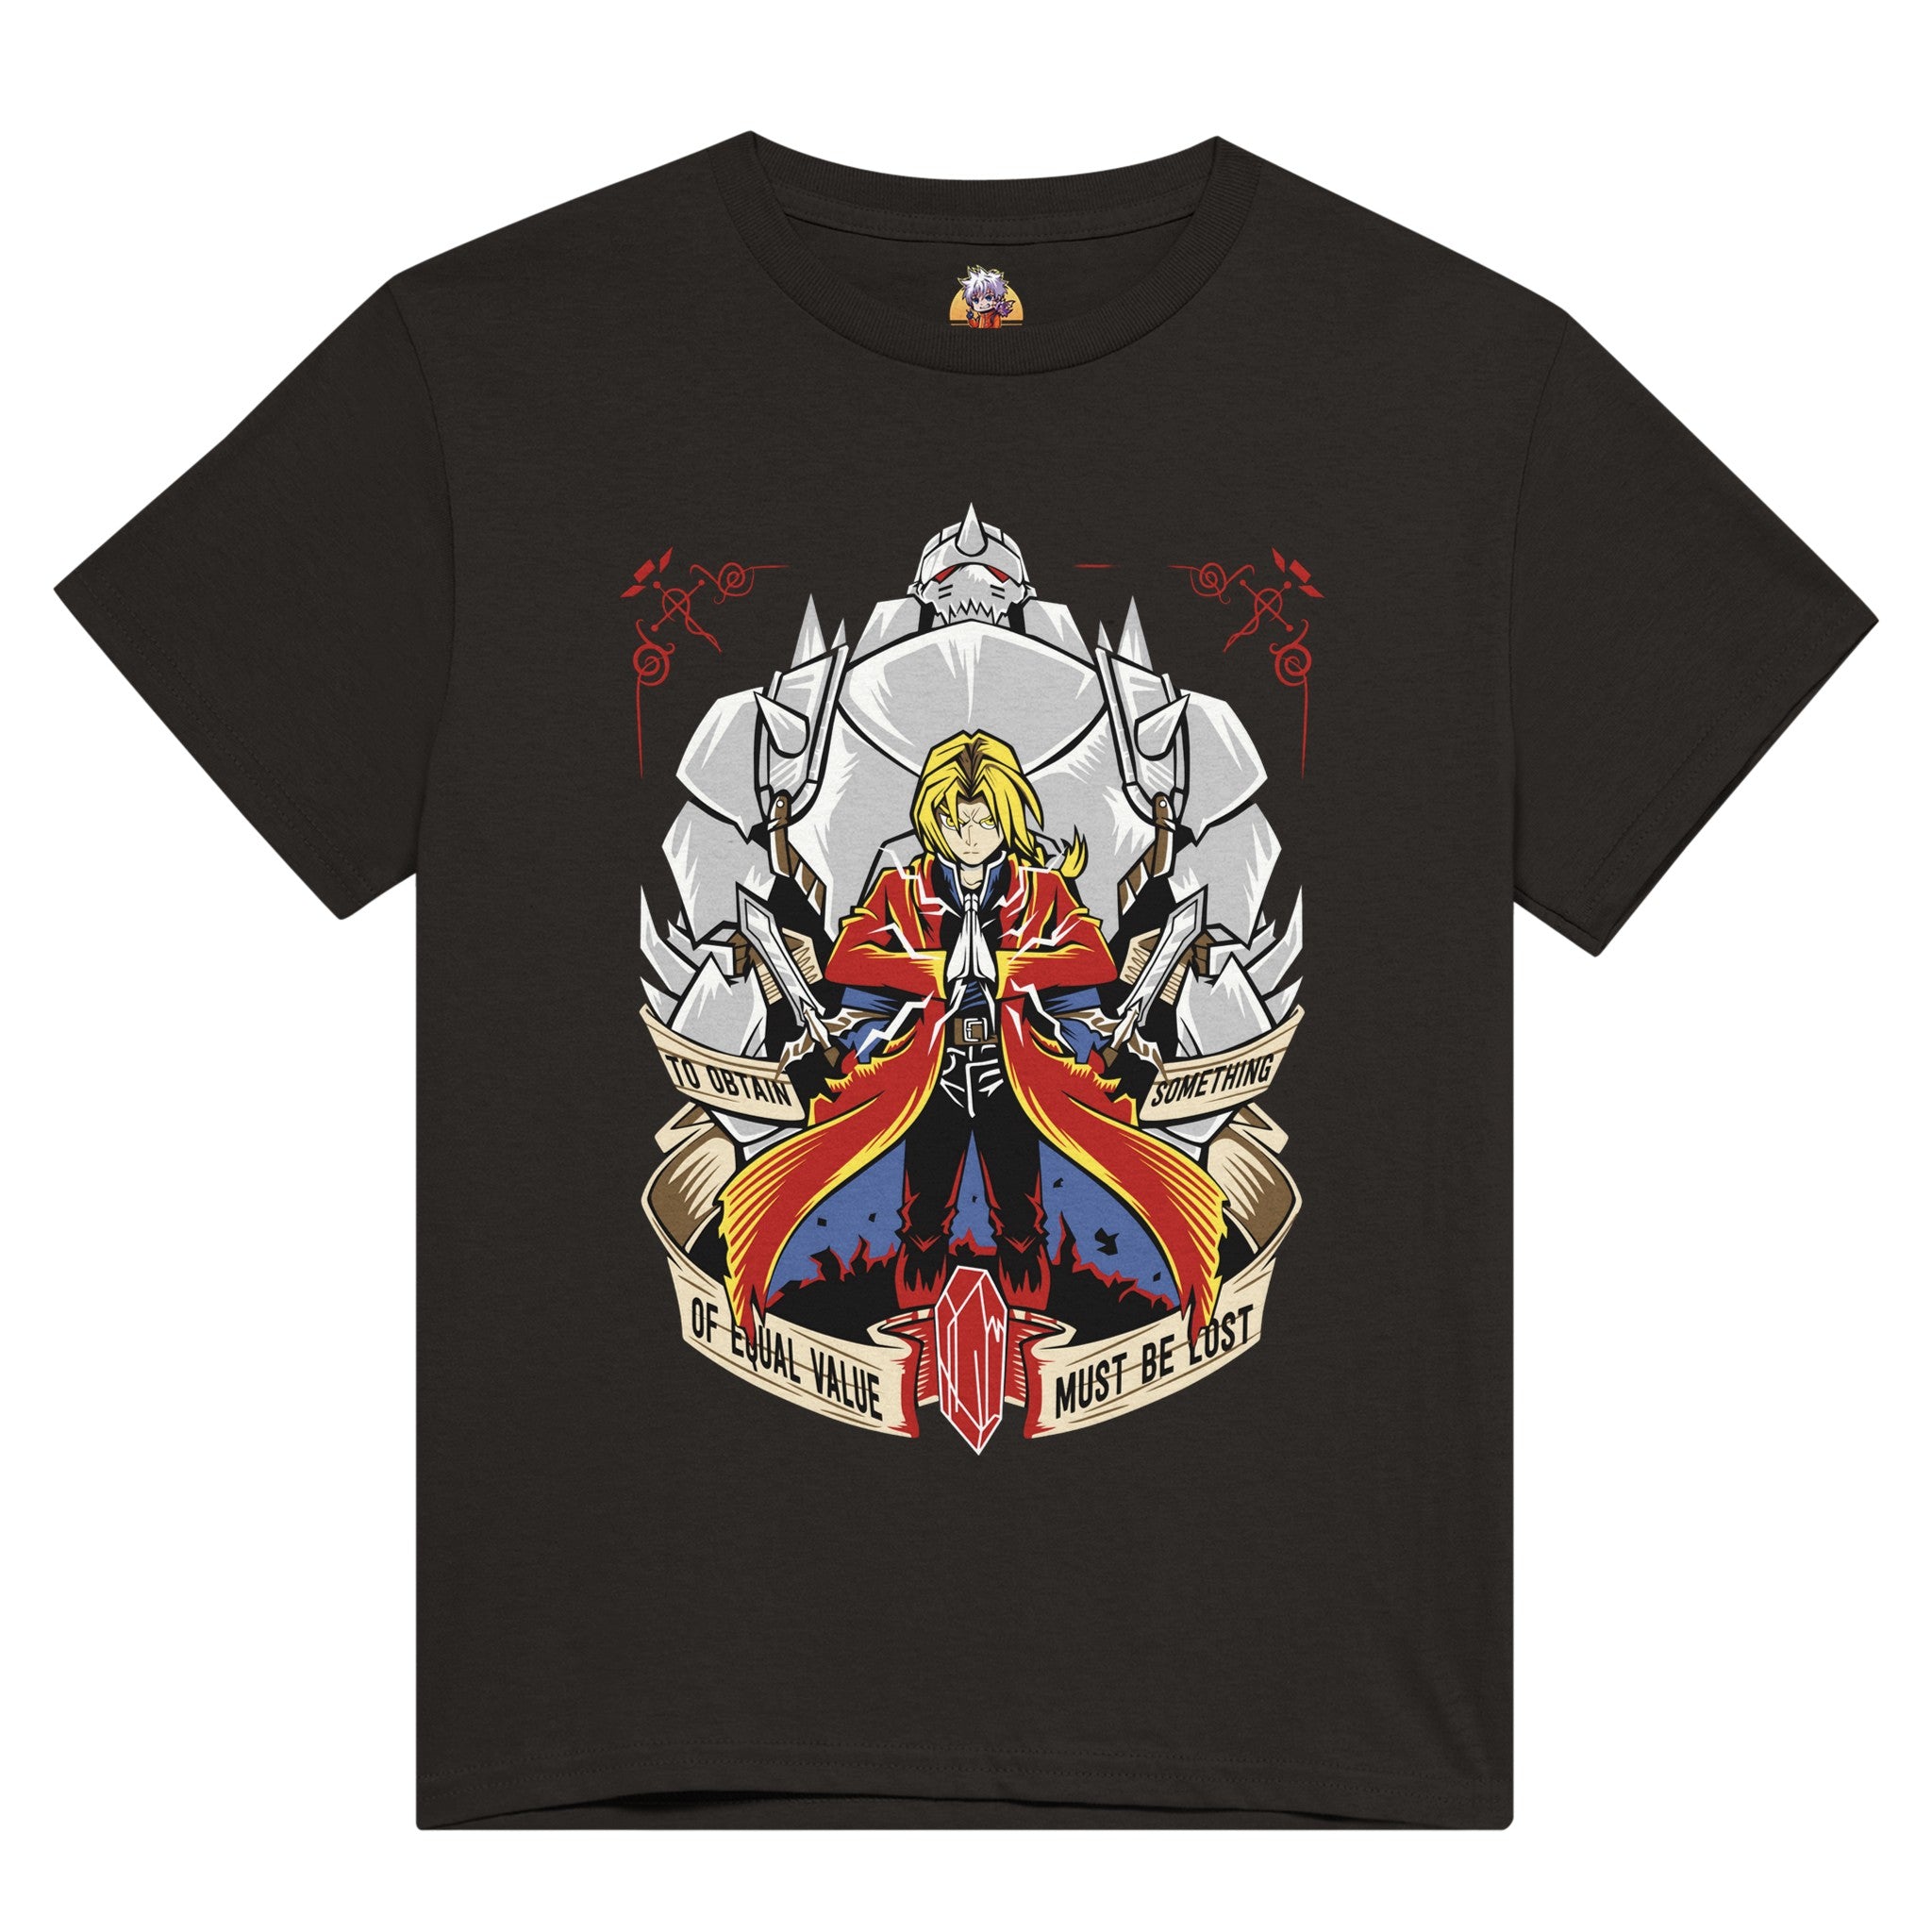 shop and buy fullmetal alchemist anime clothing edward elric and alponse t-shirt